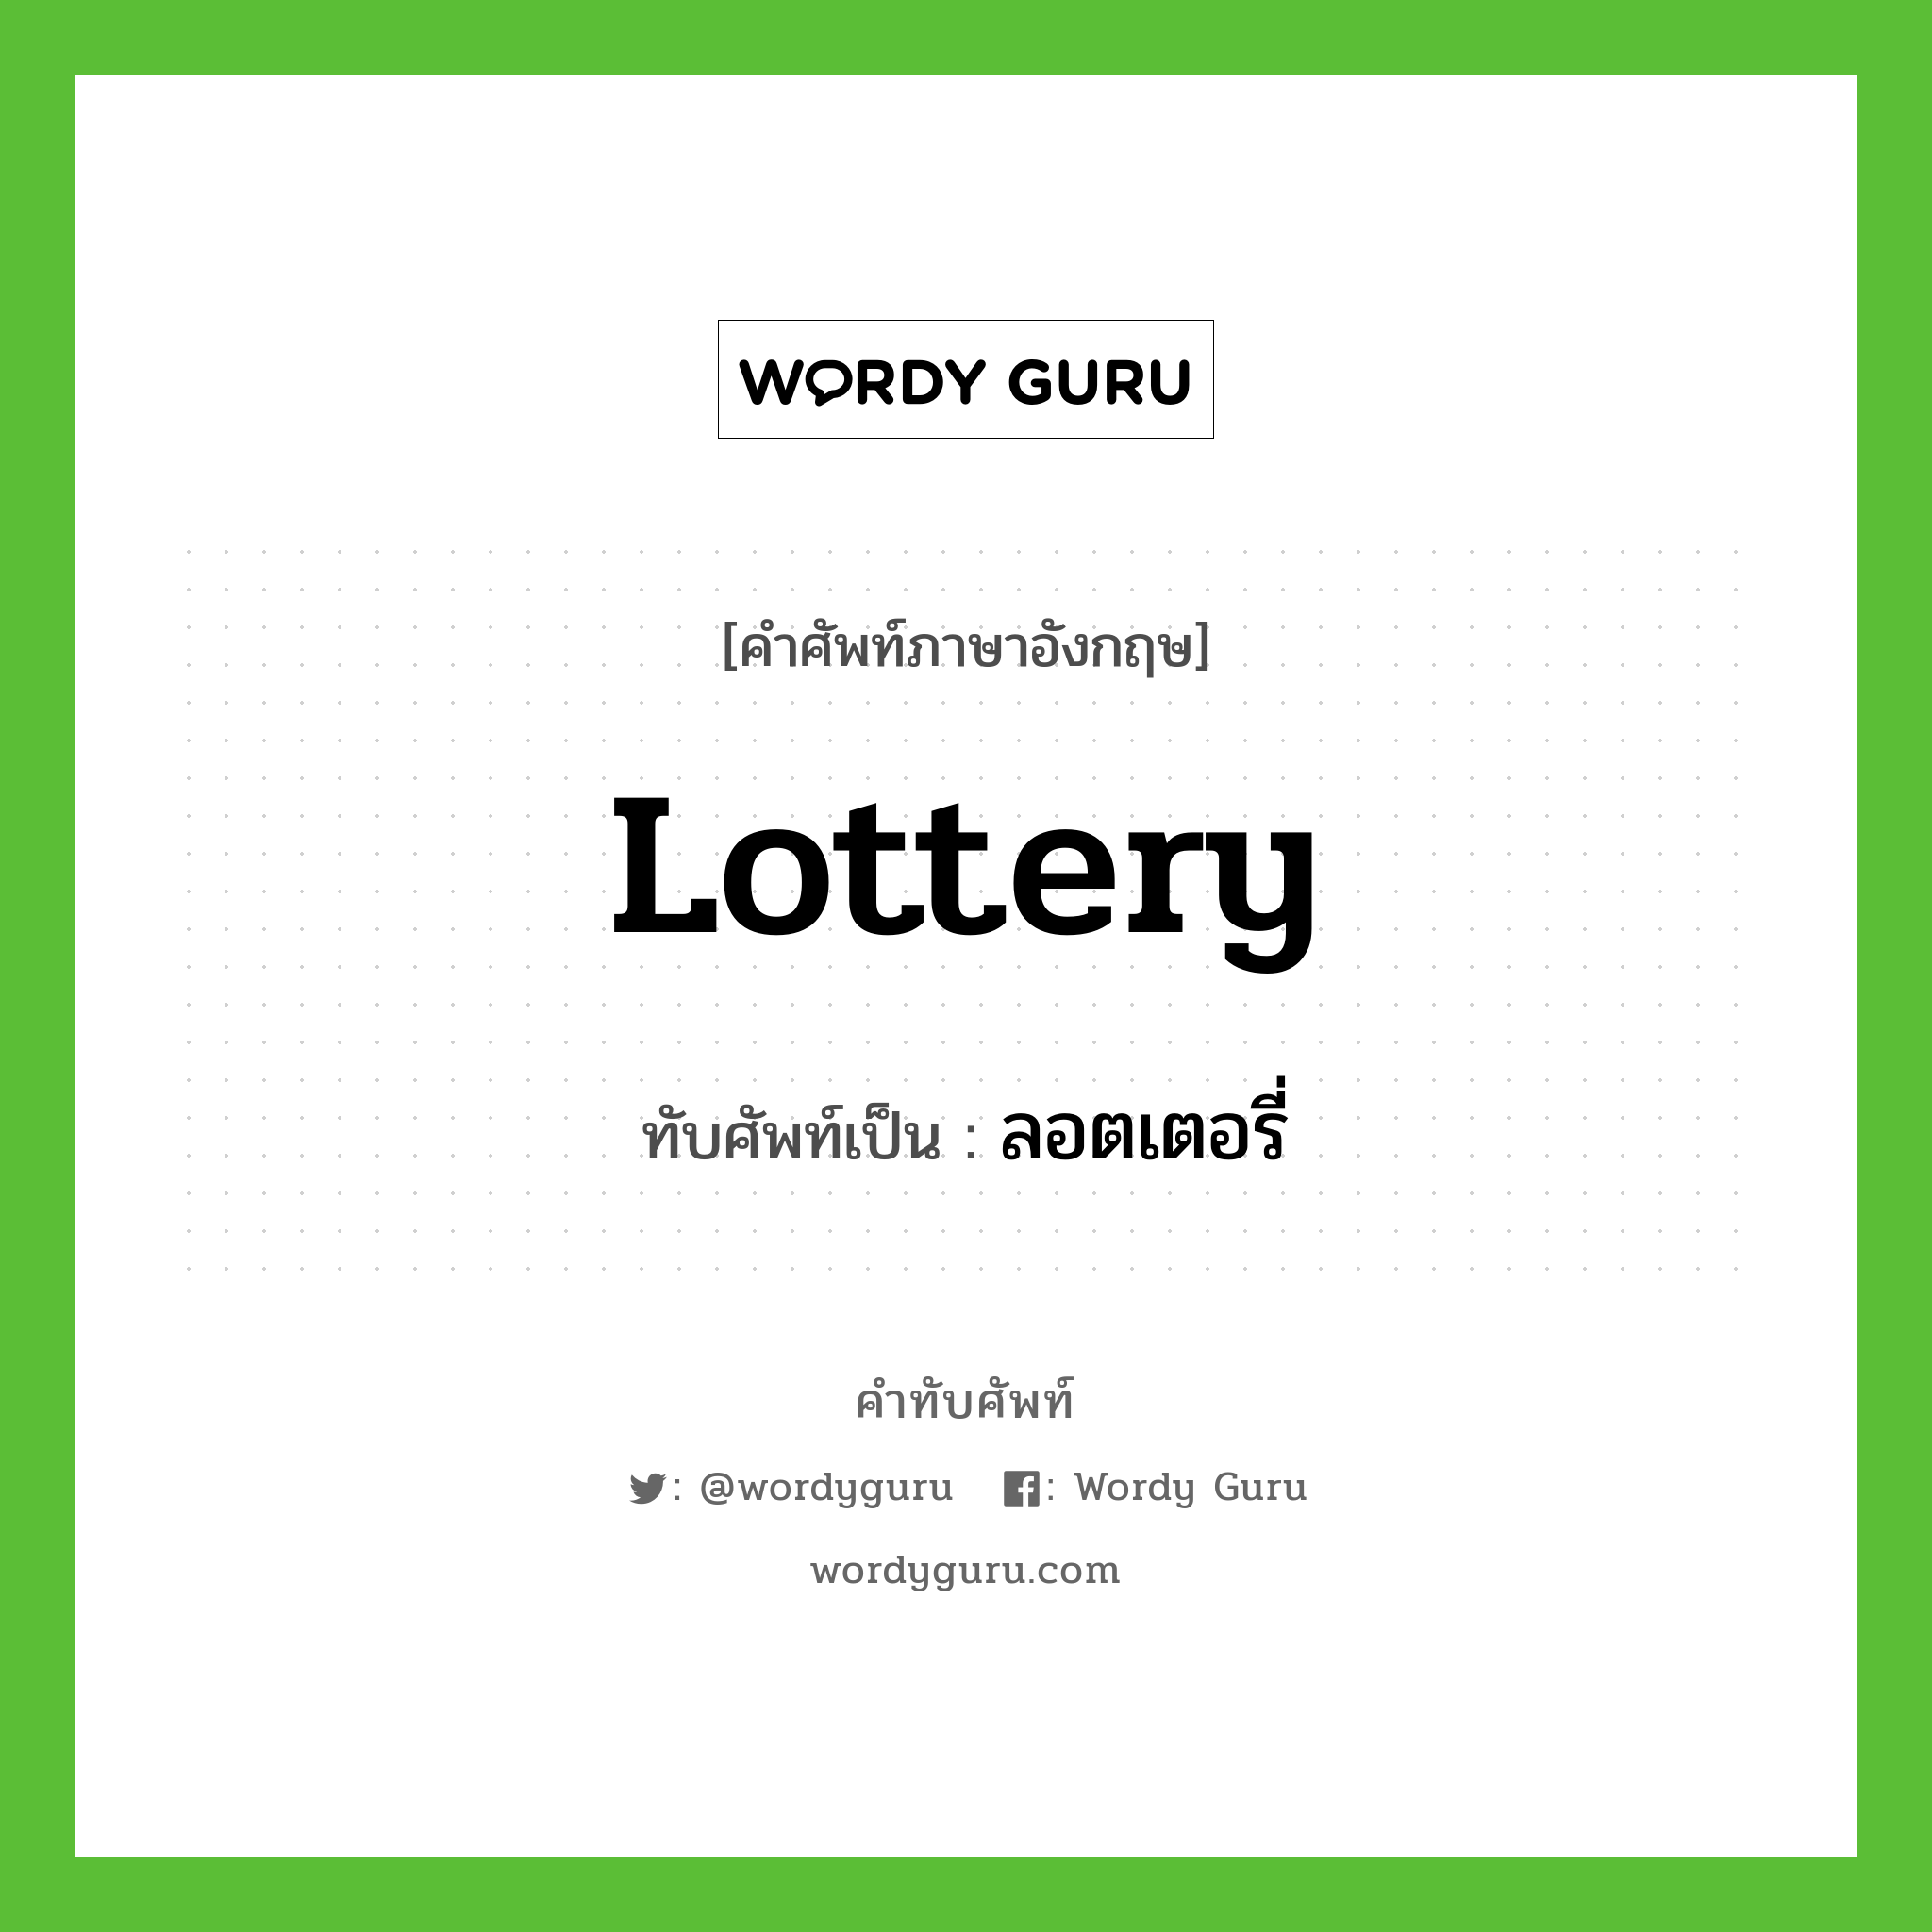 lottery เขียนเป็นคำไทยว่าอะไร?, คำศัพท์ภาษาอังกฤษ lottery ทับศัพท์เป็น ลอตเตอรี่